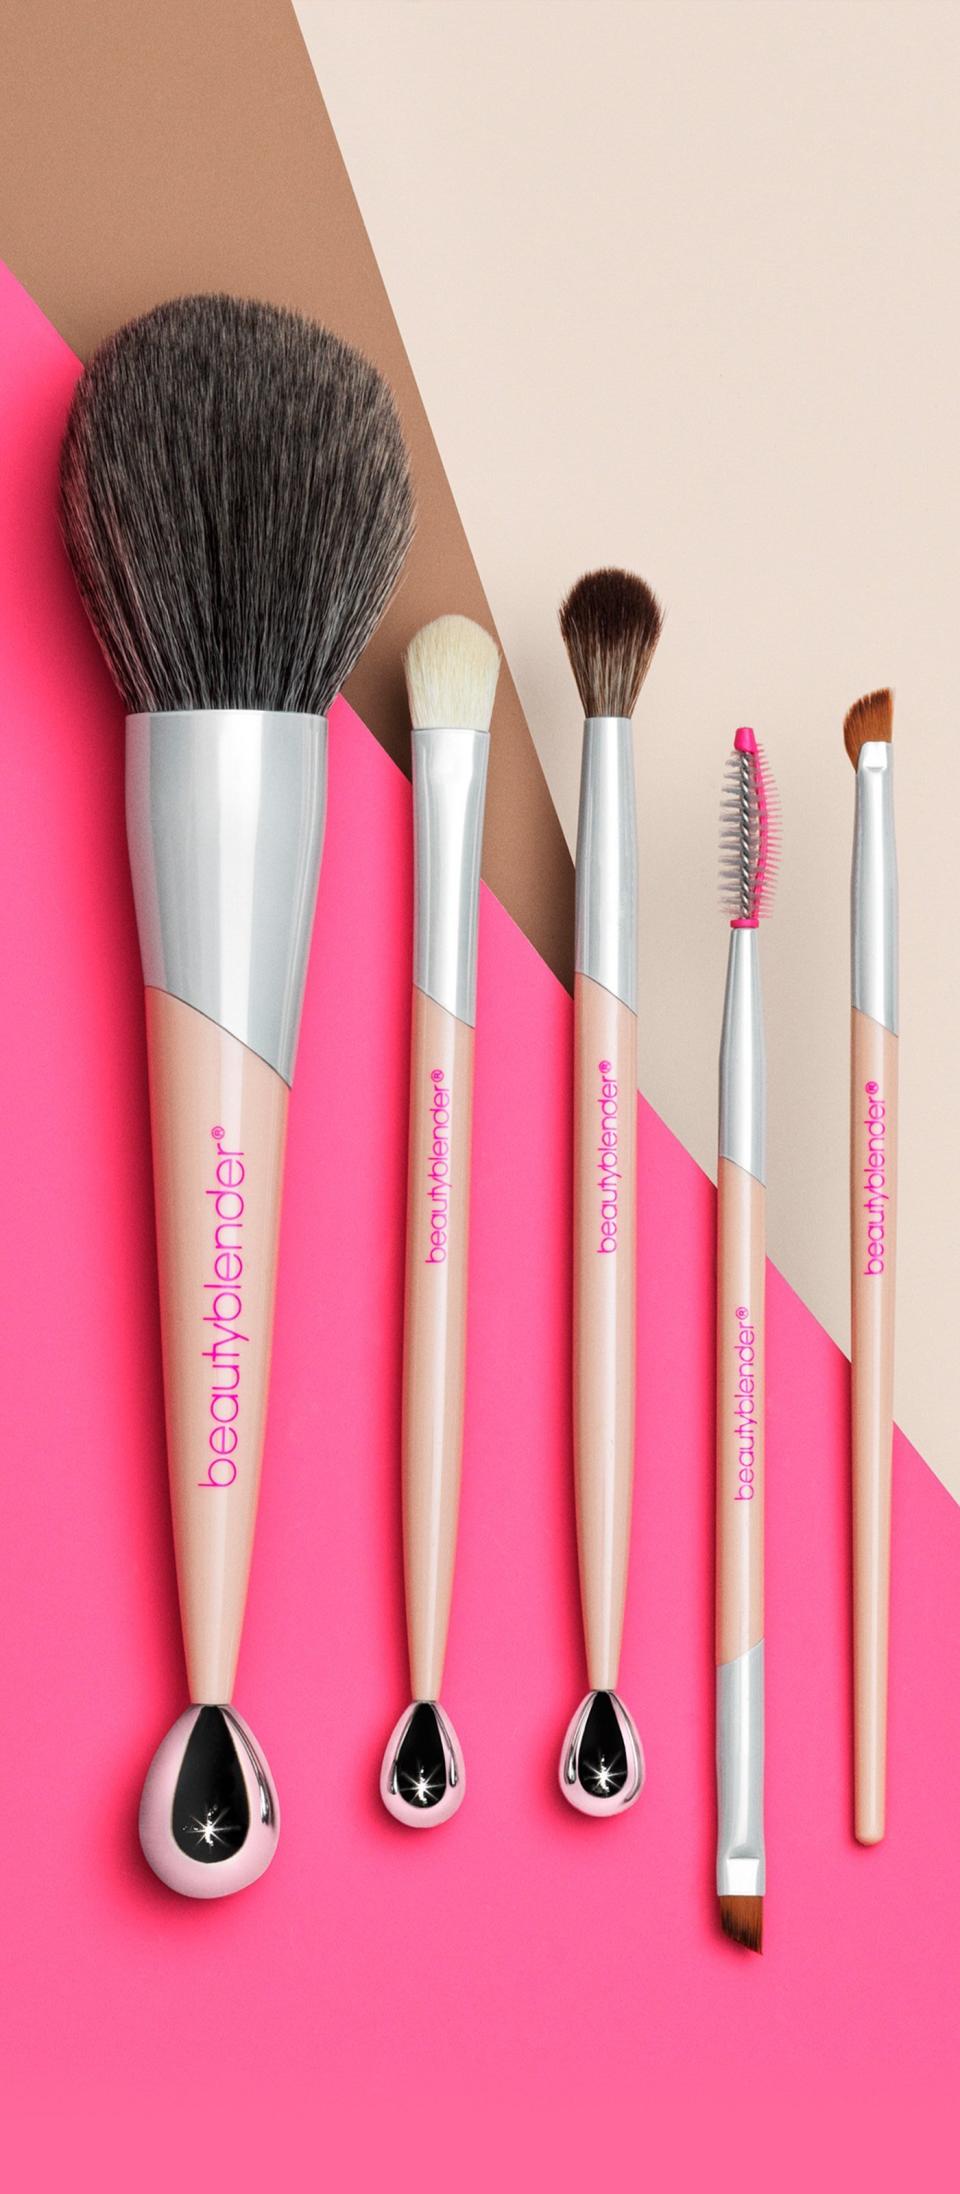 Beautyblender Makeup Brush Set